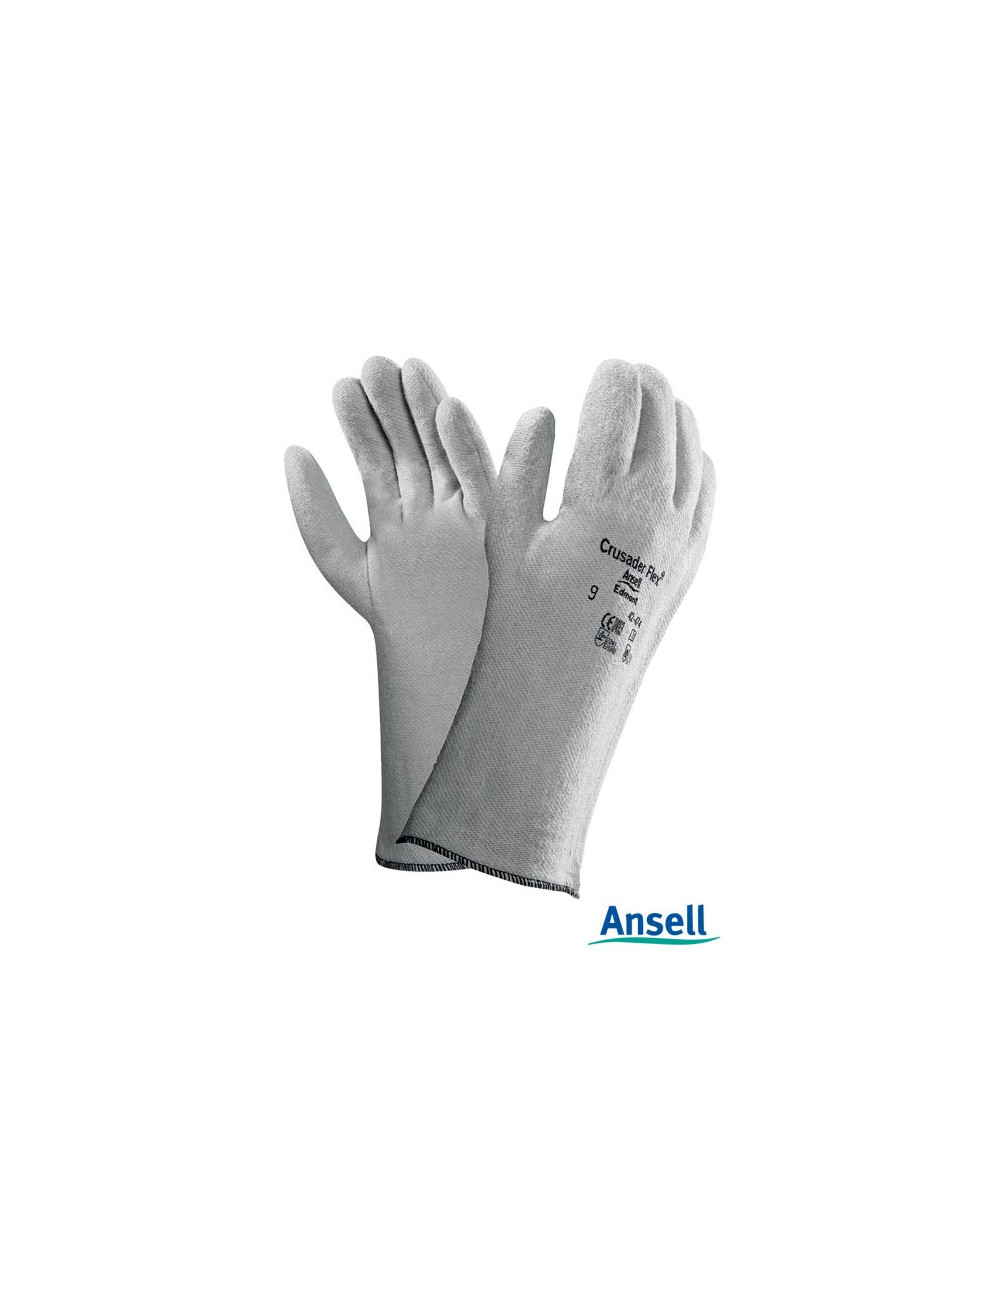 Protective gloves racrusad42-474 s gray/steel Ansell